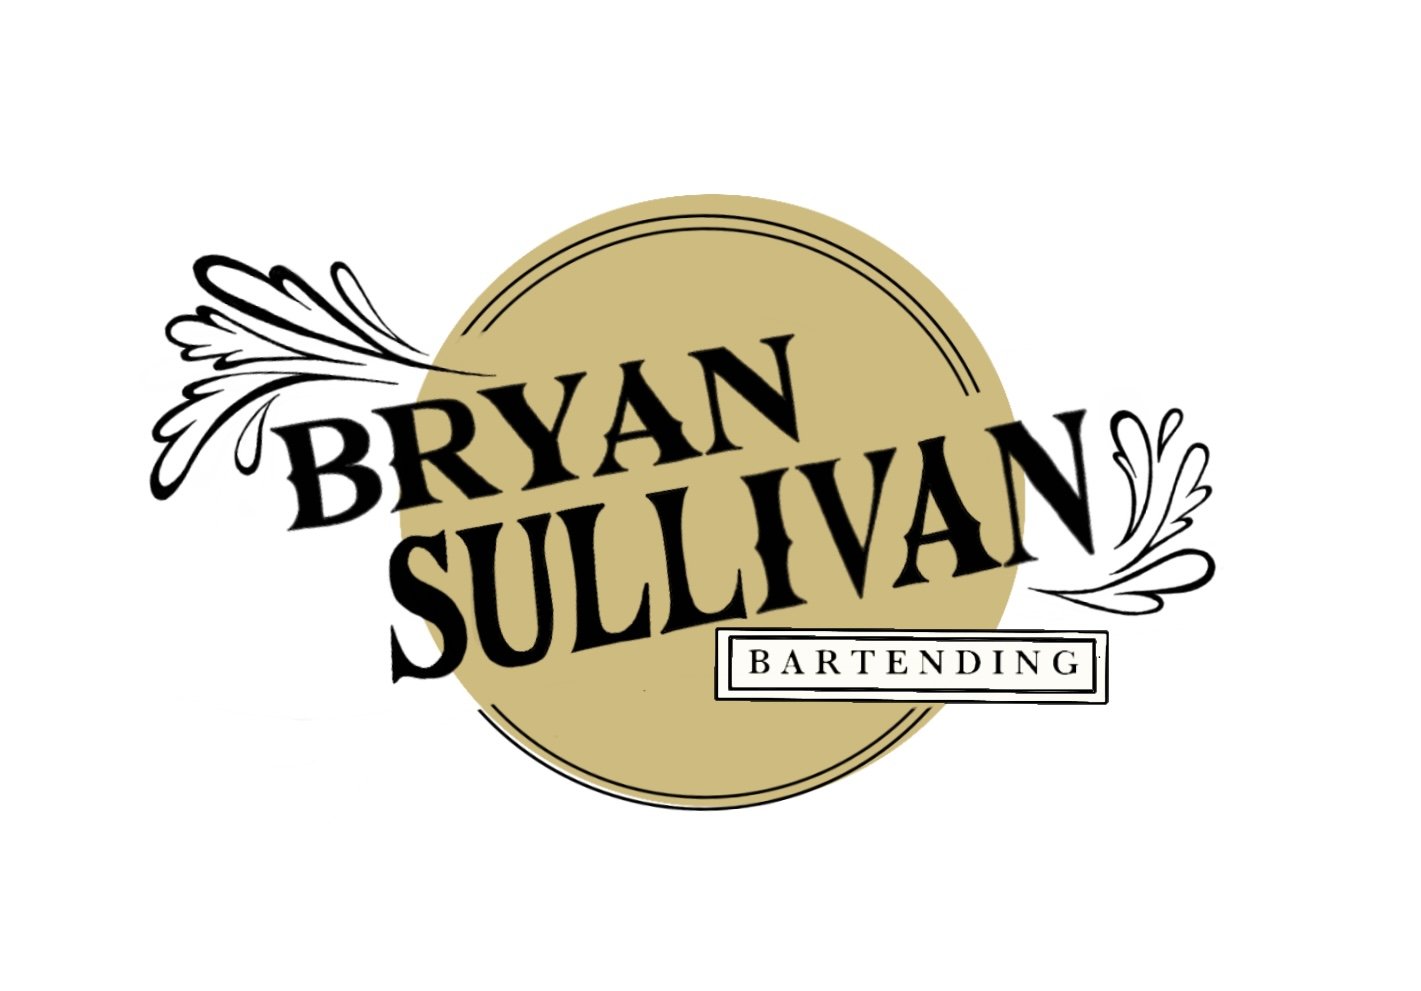 Bryan Sullivan Bartending                     